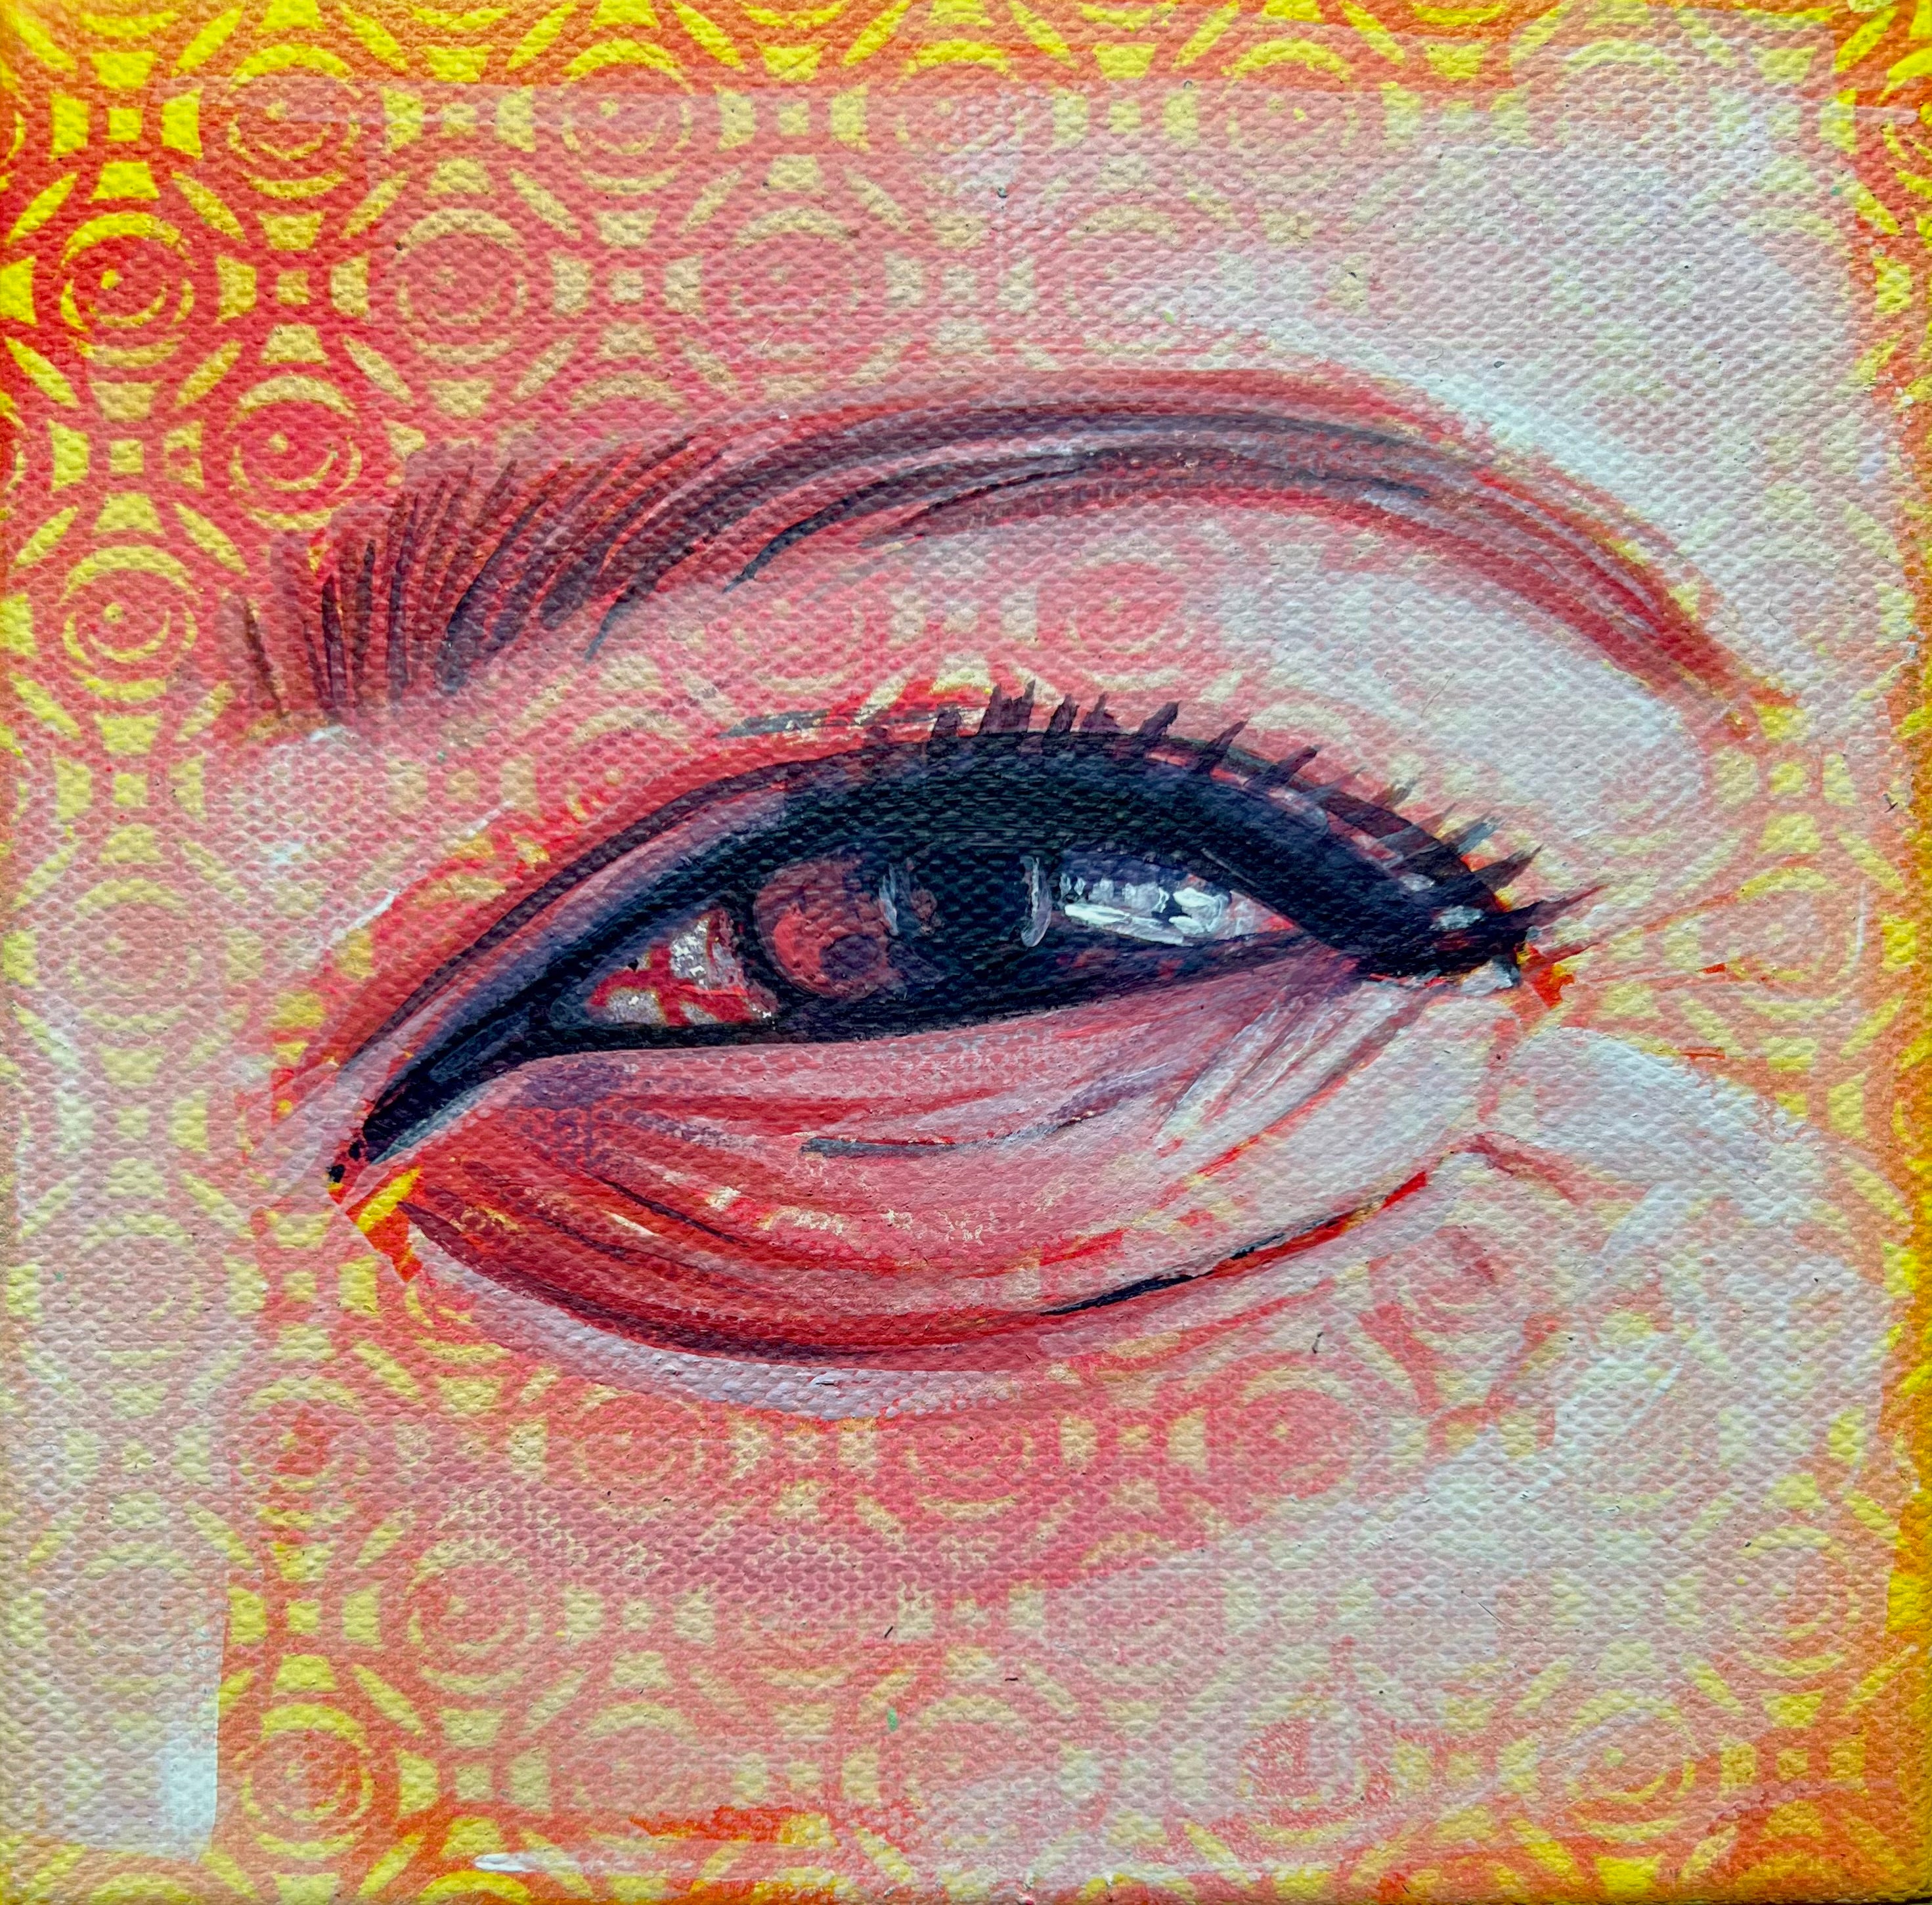 Alex Eickhoff @eye_cough "Eye within Eyez" - @EYEZ C👁LLAB👁RATE Painting